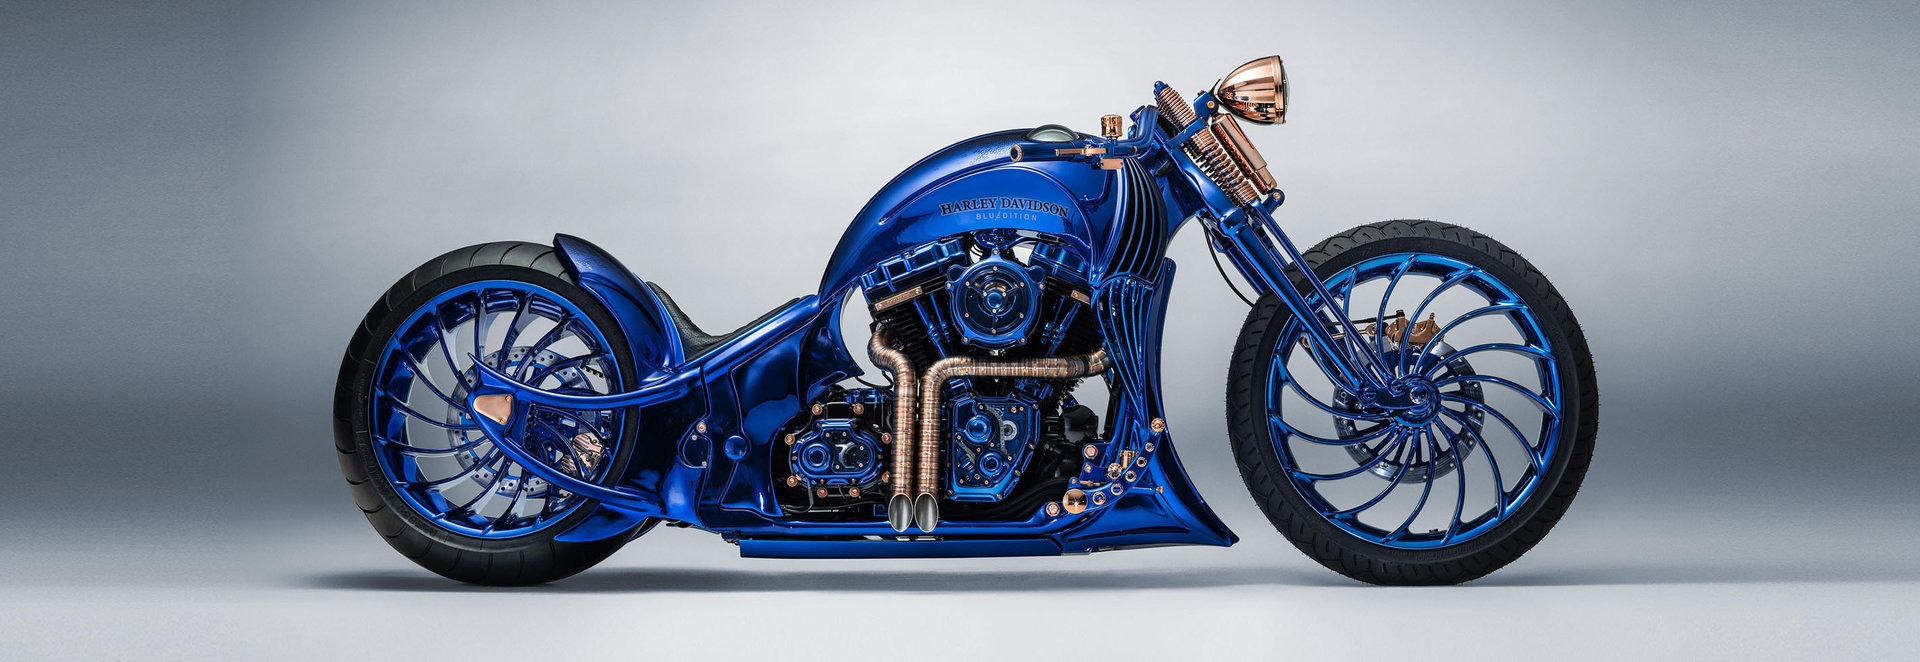 Moto del día: Harley-Davidson Bucherer Blue Edition